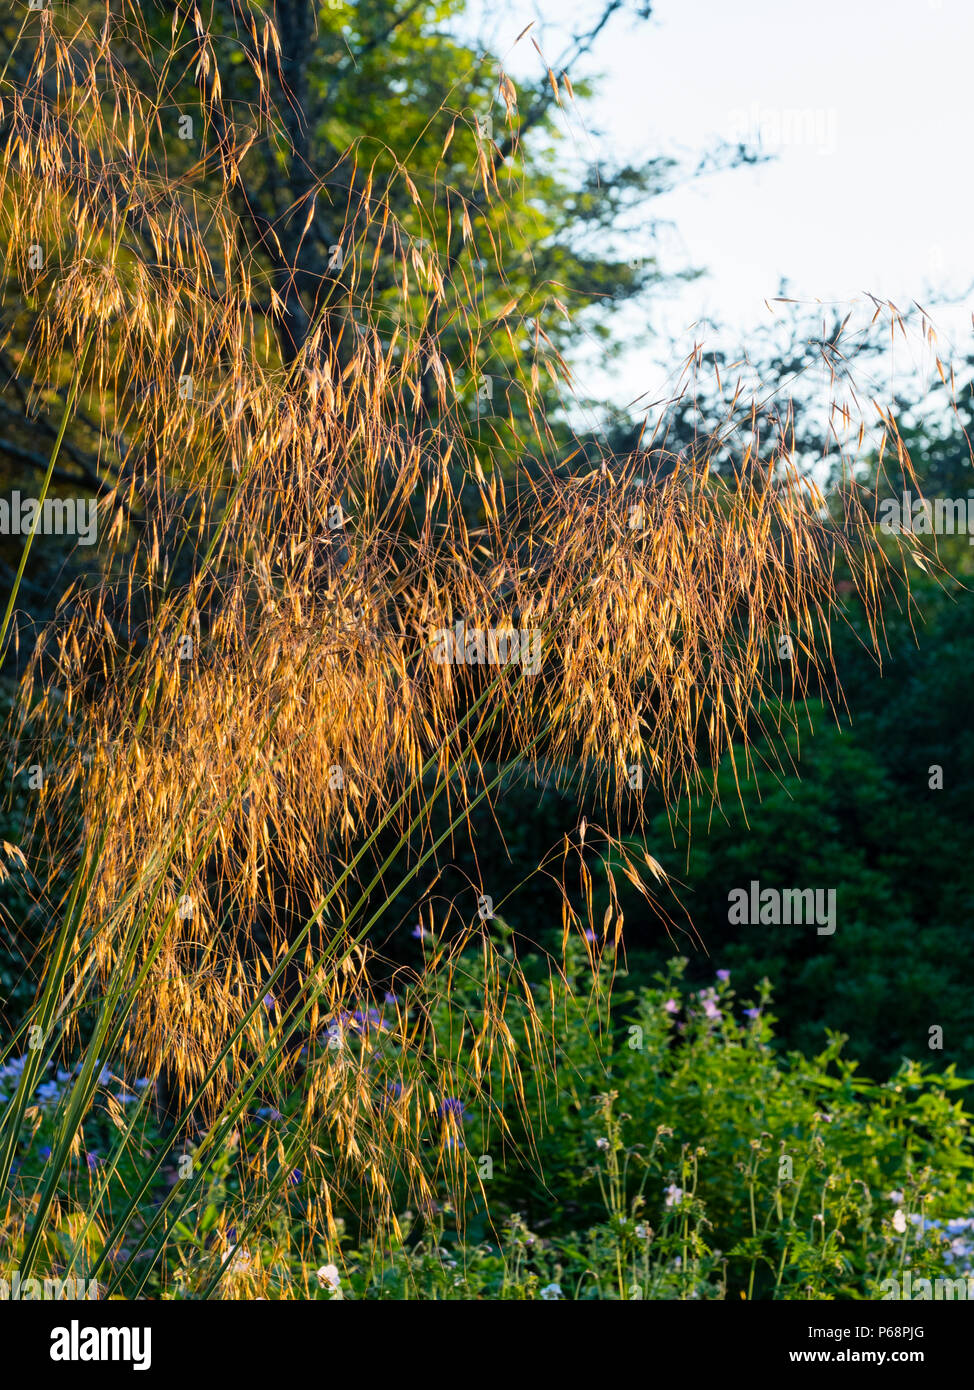 Dangling samenköpfe der ornamental grass Stipa gigantea im Abendlicht Stockfoto